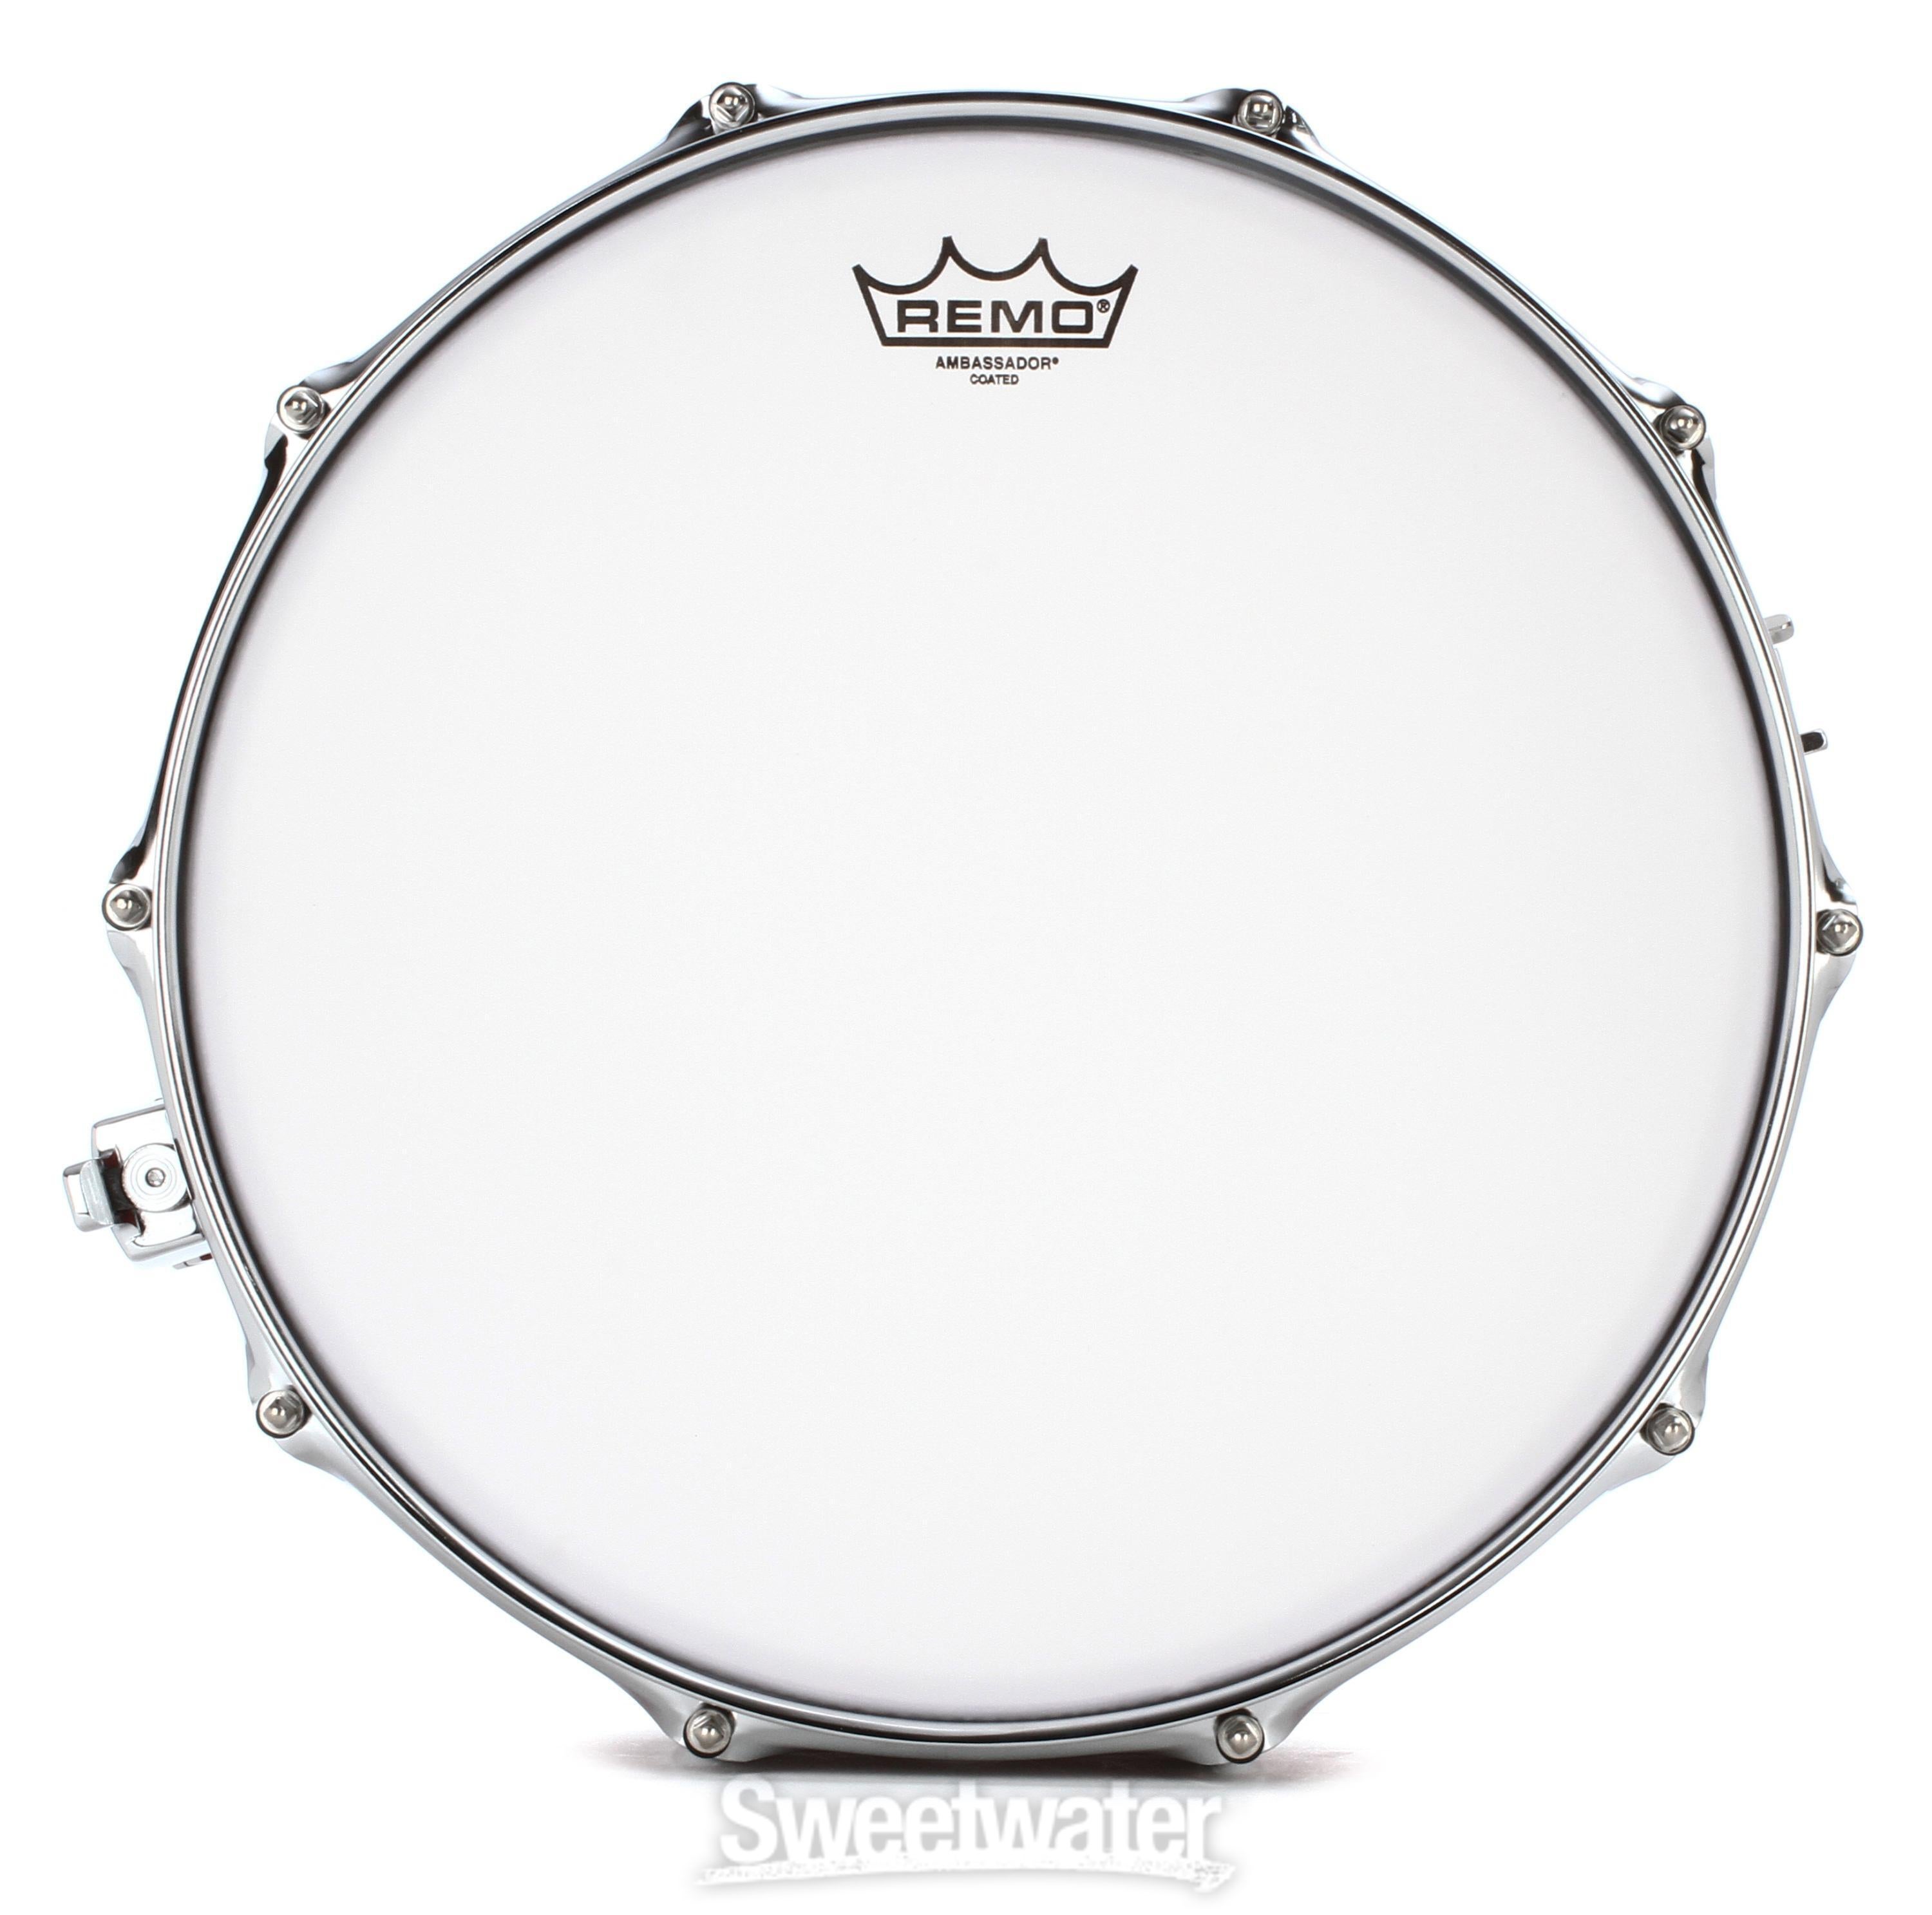 Pearl Chad Smith Signature Snare Drum - 5